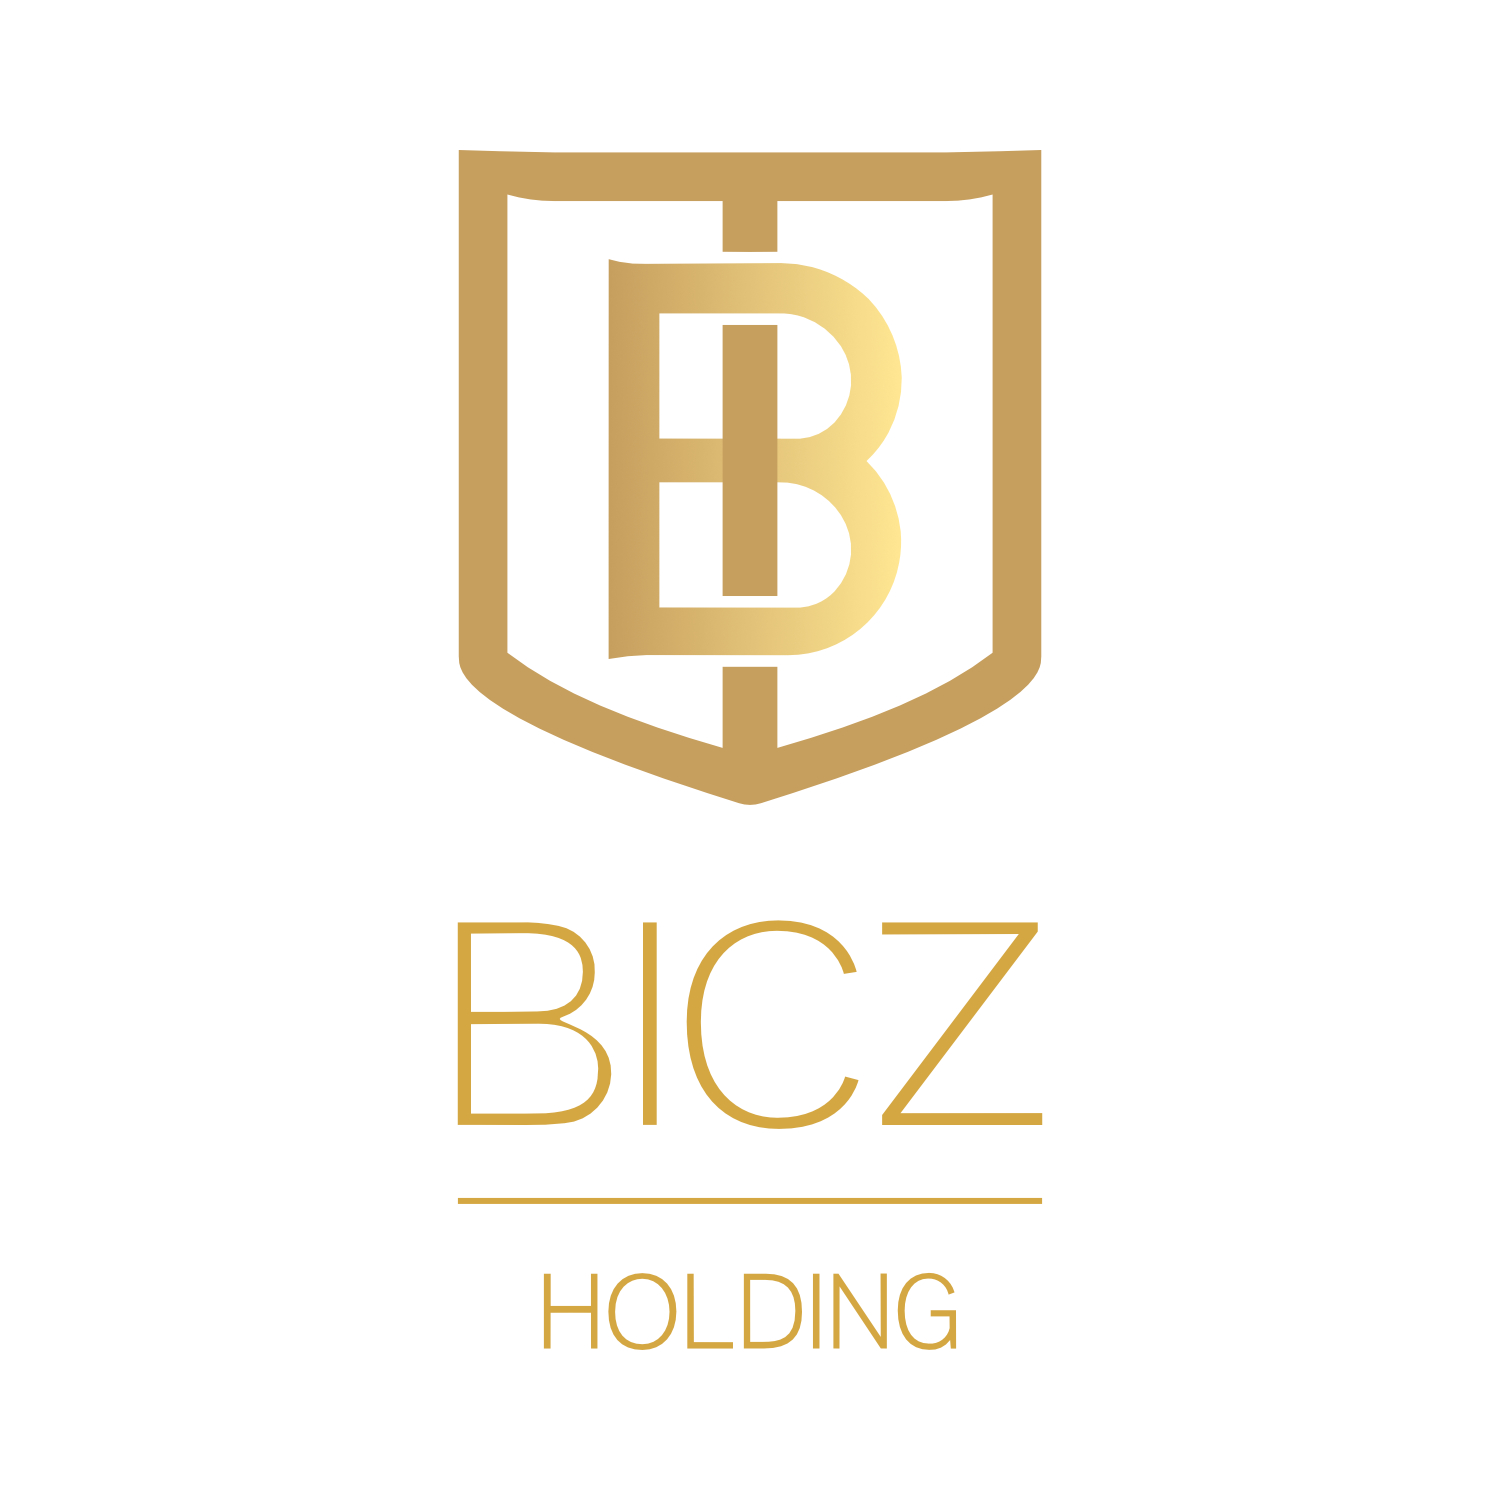 BICZ logo